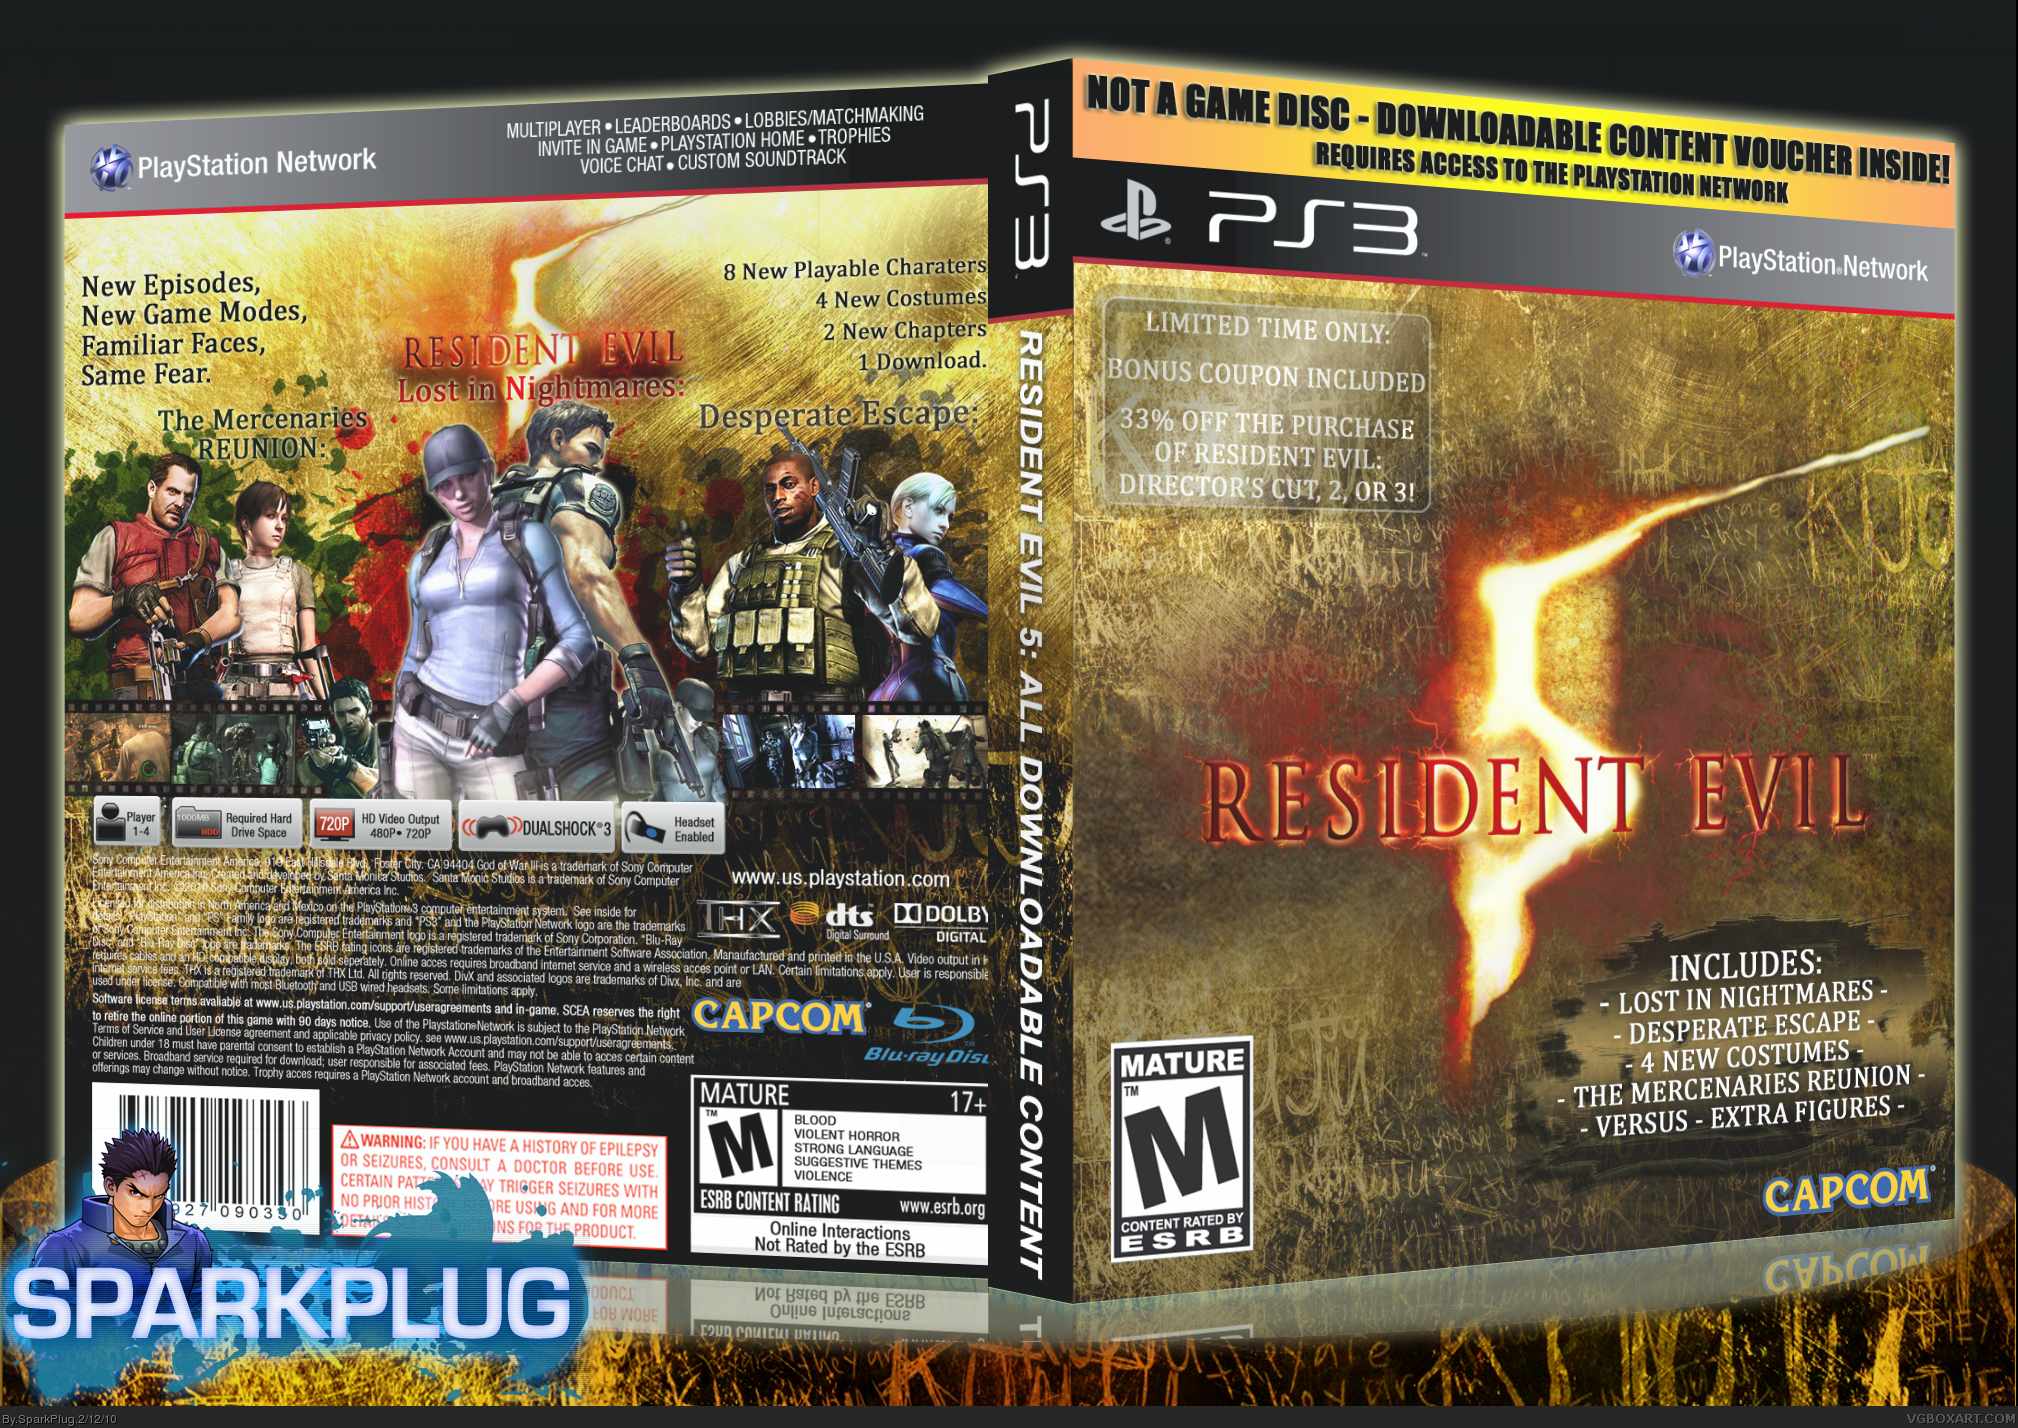 Resident Evil 5: Complete DLC Voucher box cover